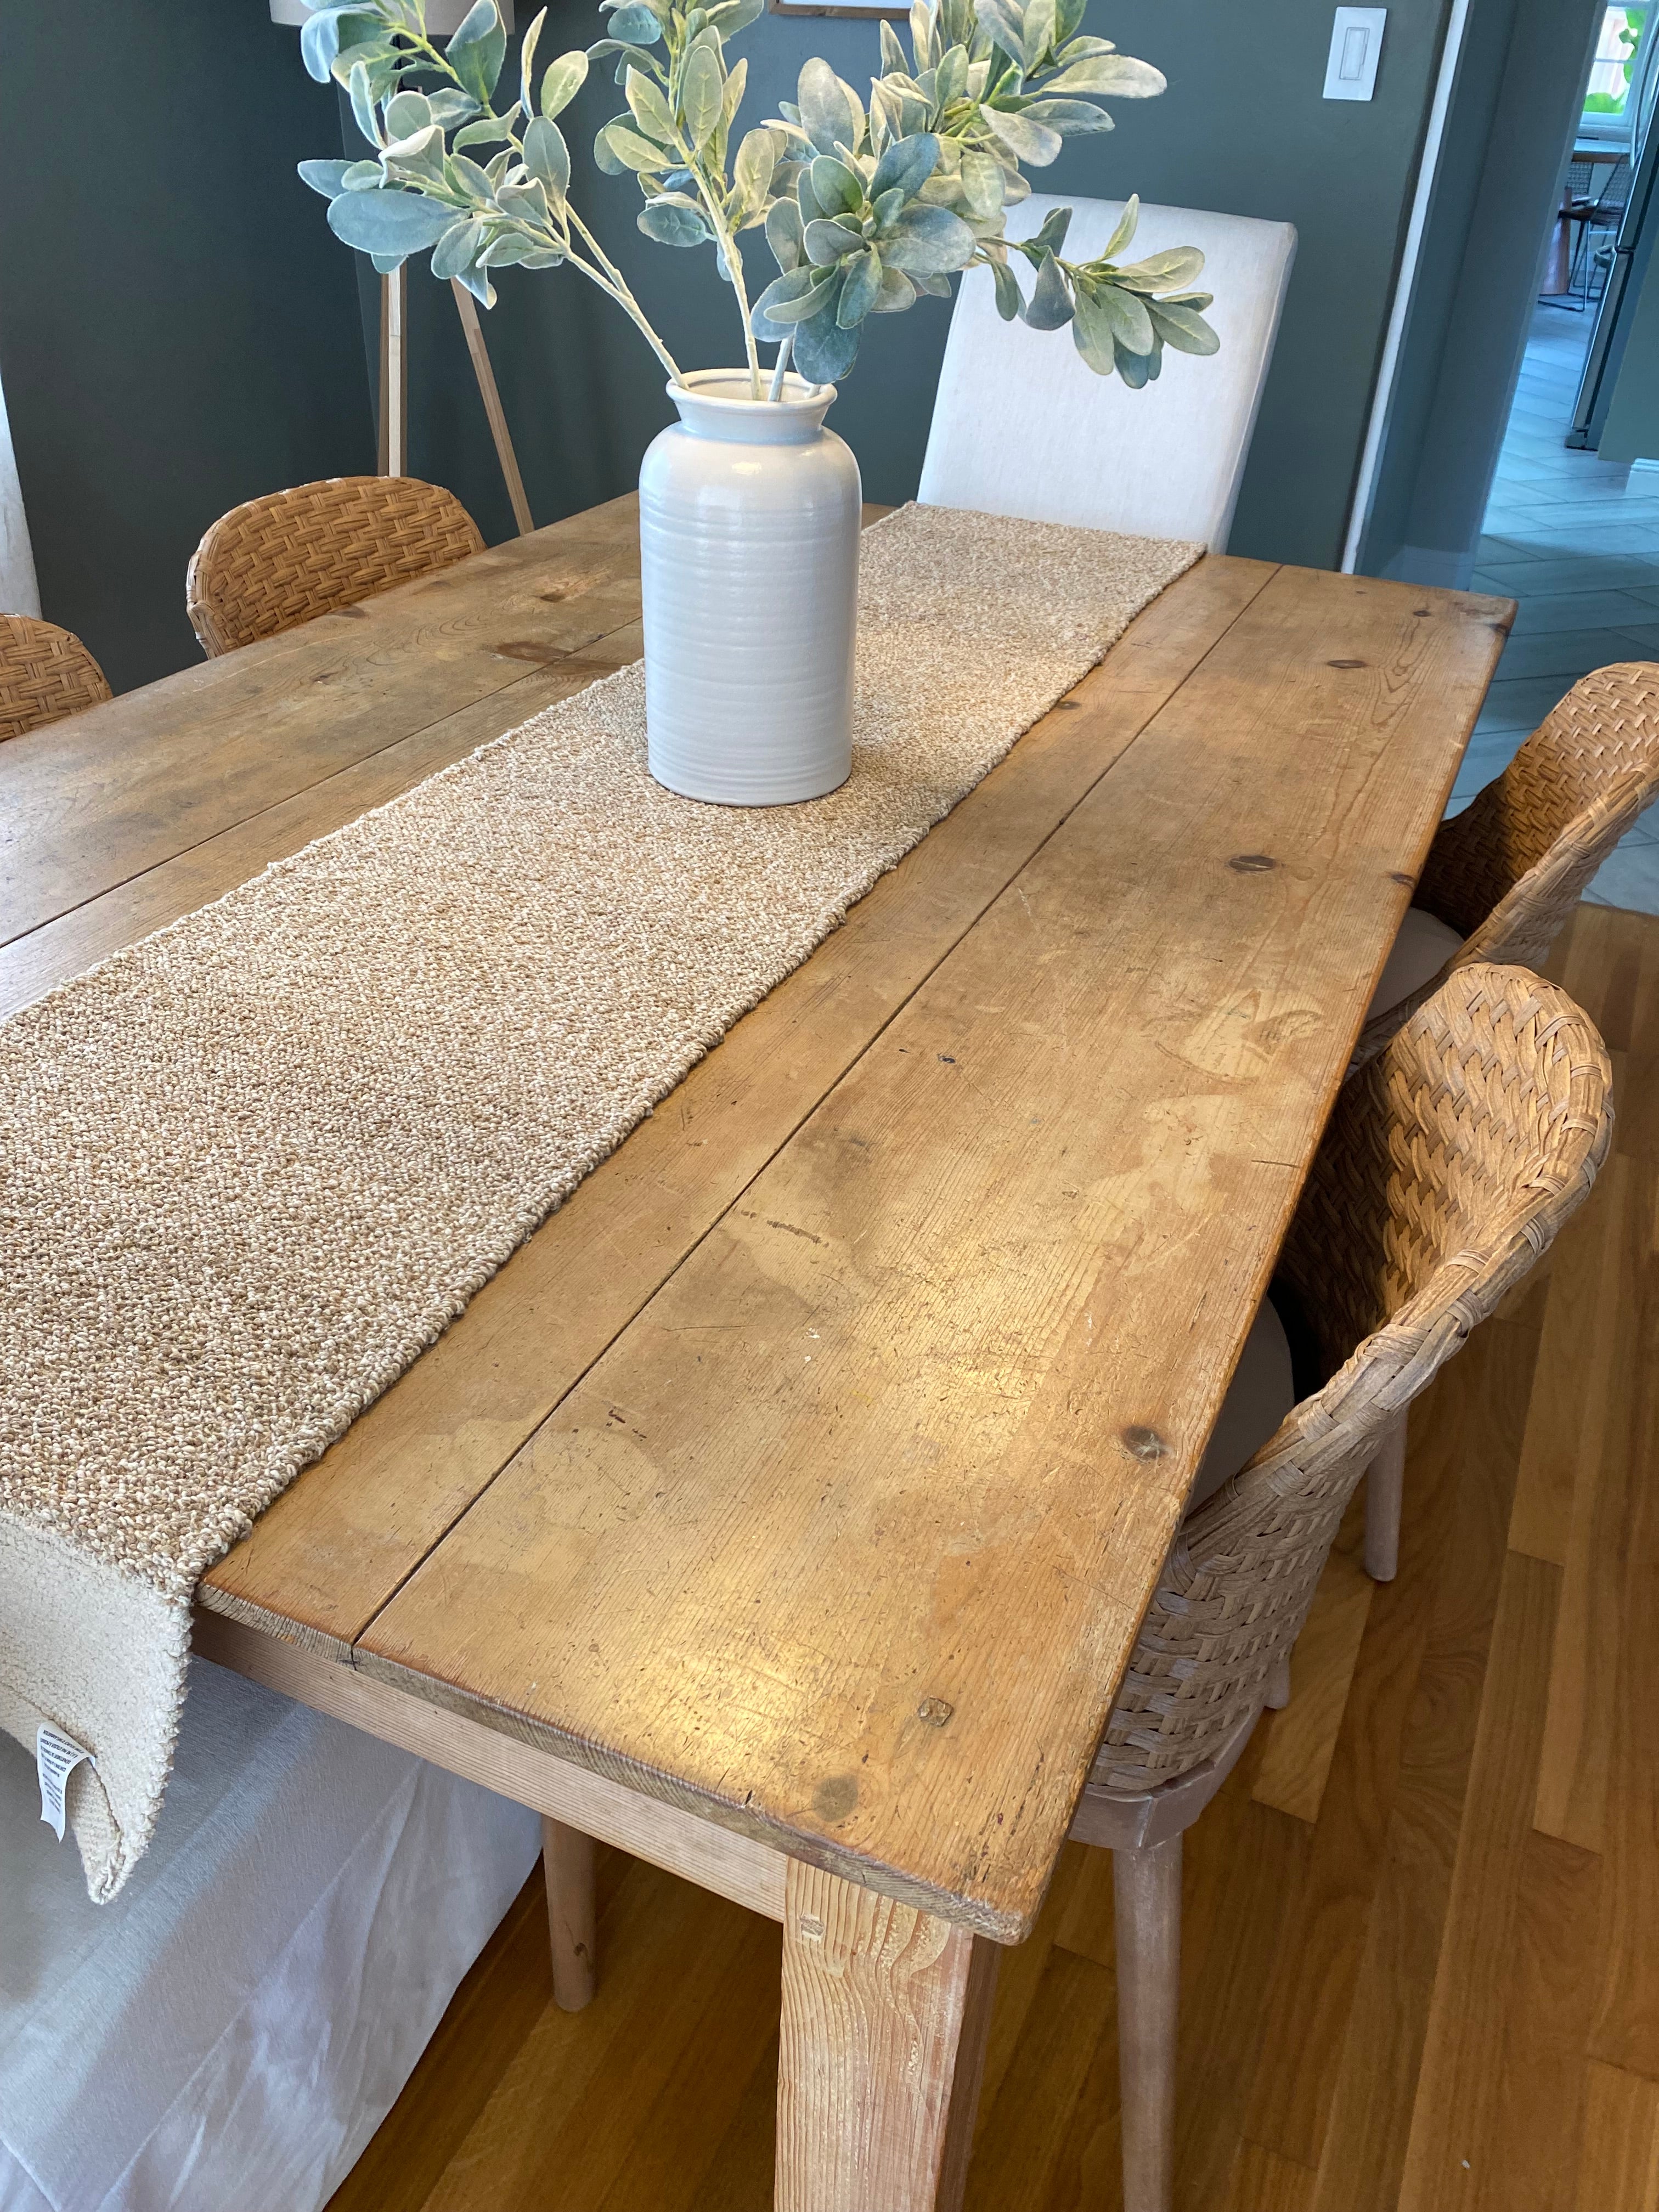 Original Vintage Pine Dining Table - 6ft